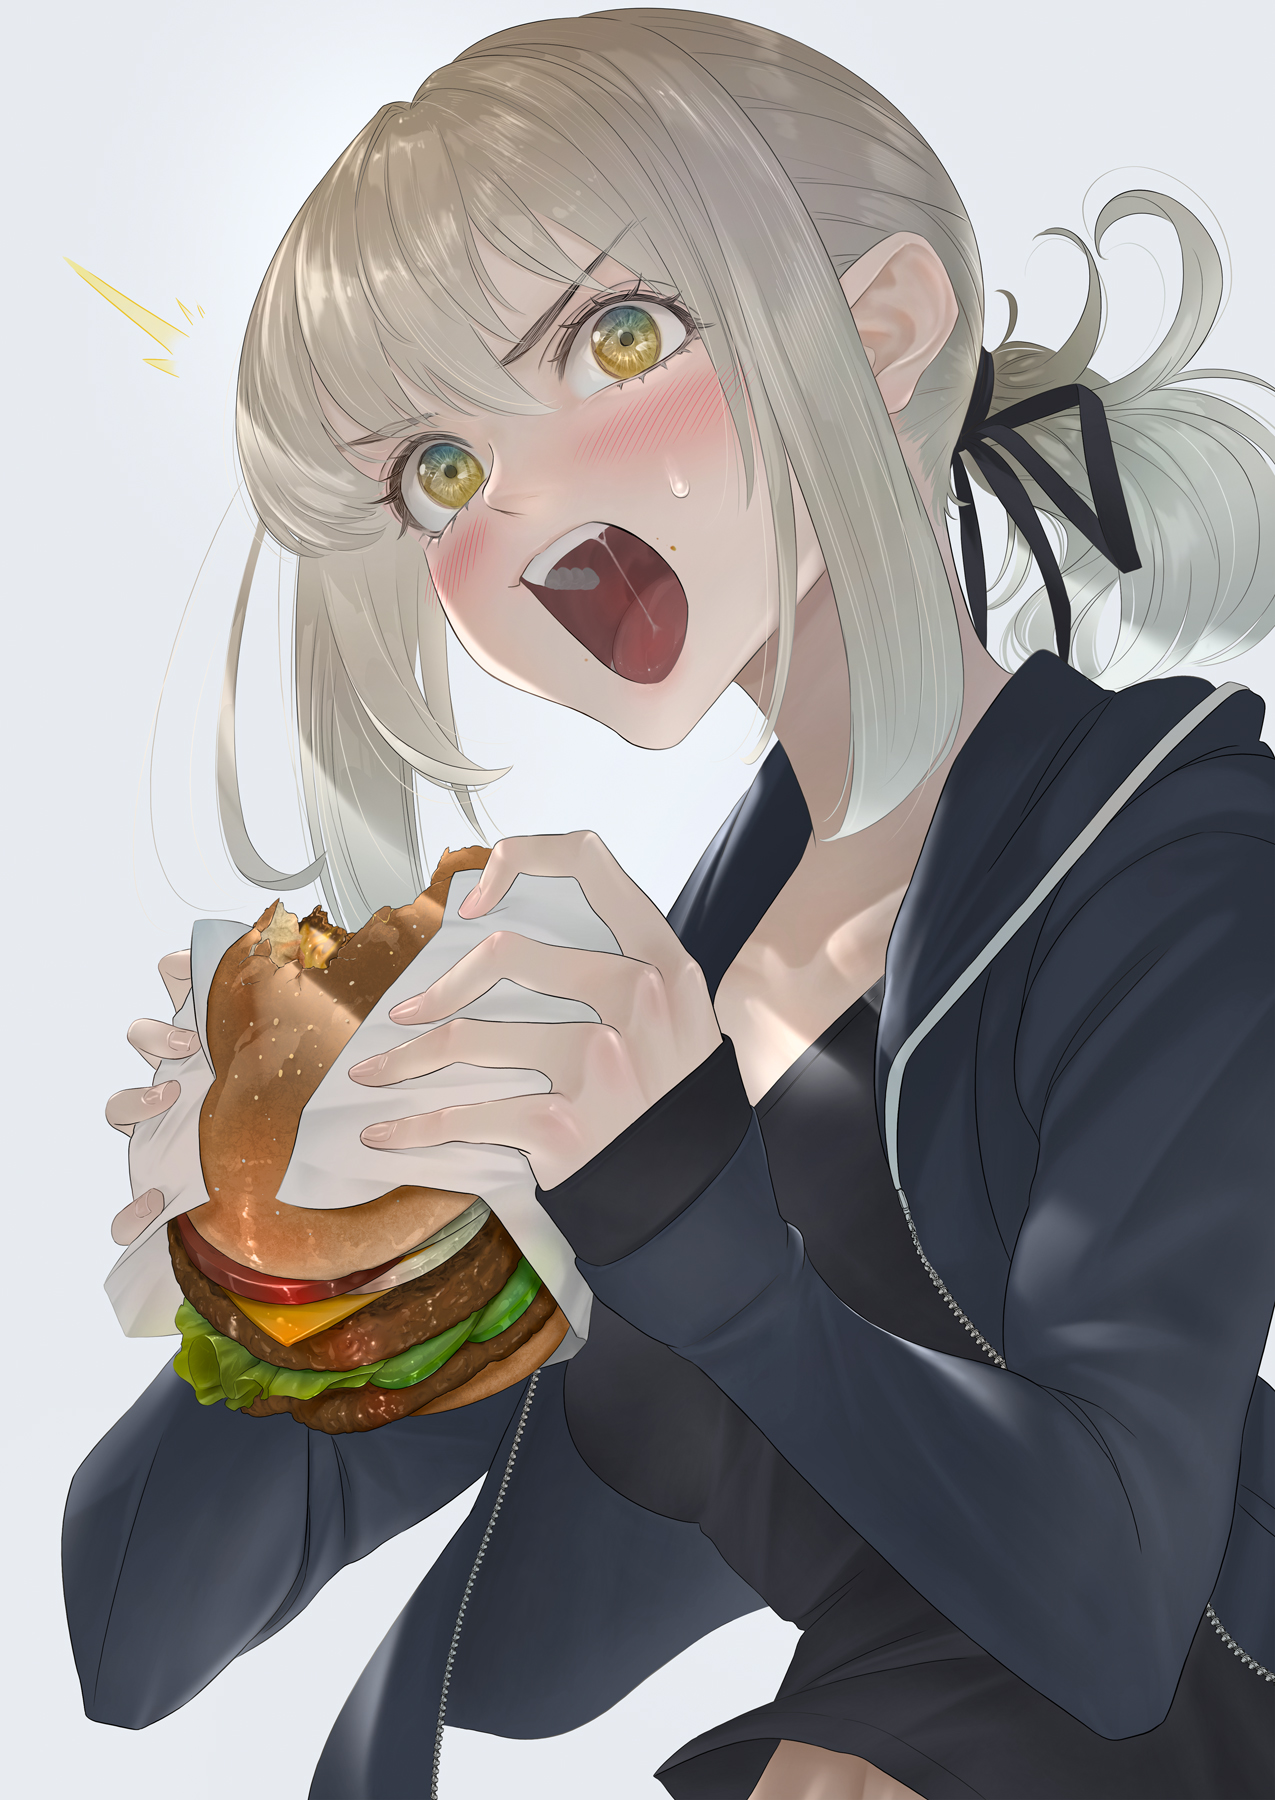 Fate Series FGO Fate Grand Order Anime Girls Eating Burgers Long Hair Black Jackets Anime Girls Open 1275x1800